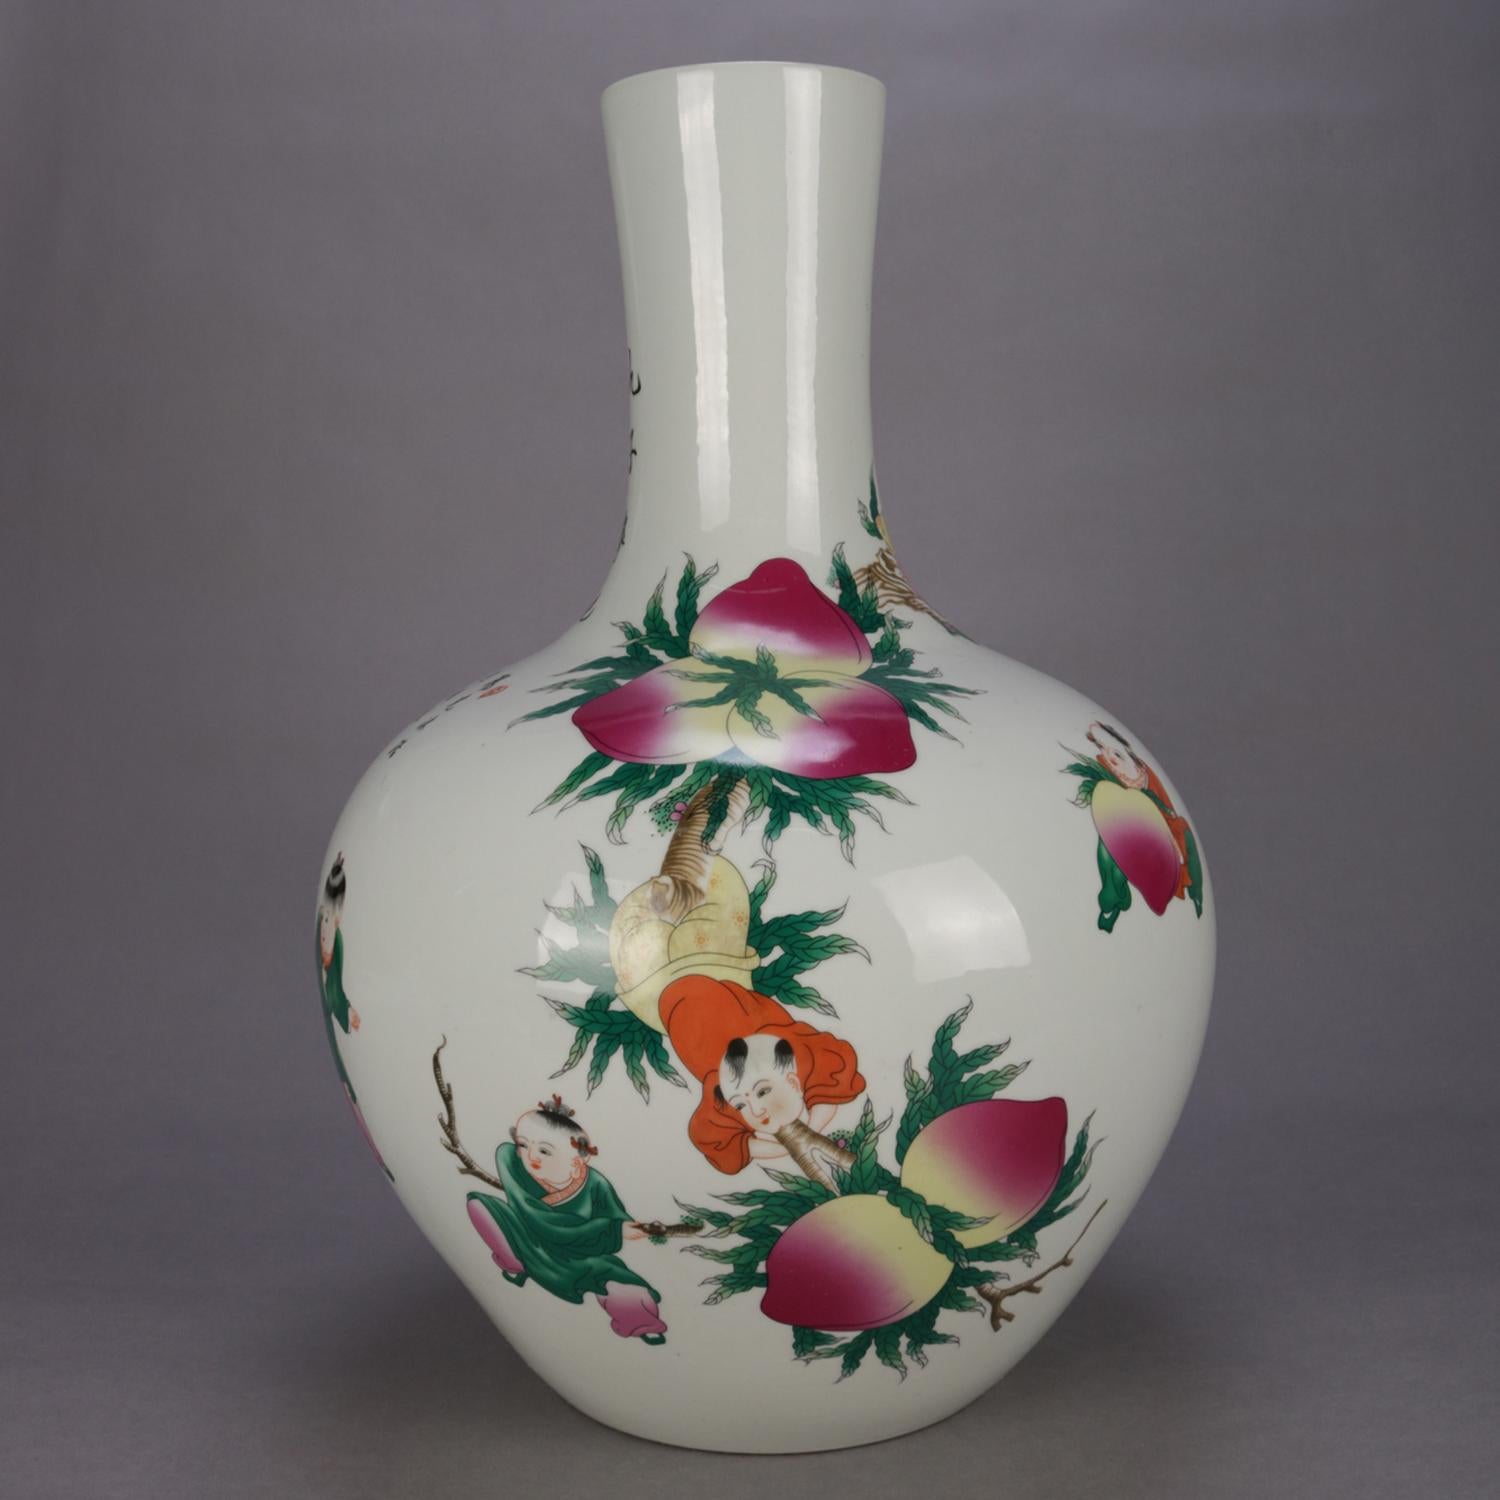 Porcelain Oversized Antique Chinese Hand Painted Bulbous Vase, Tree & Figures 20th Century